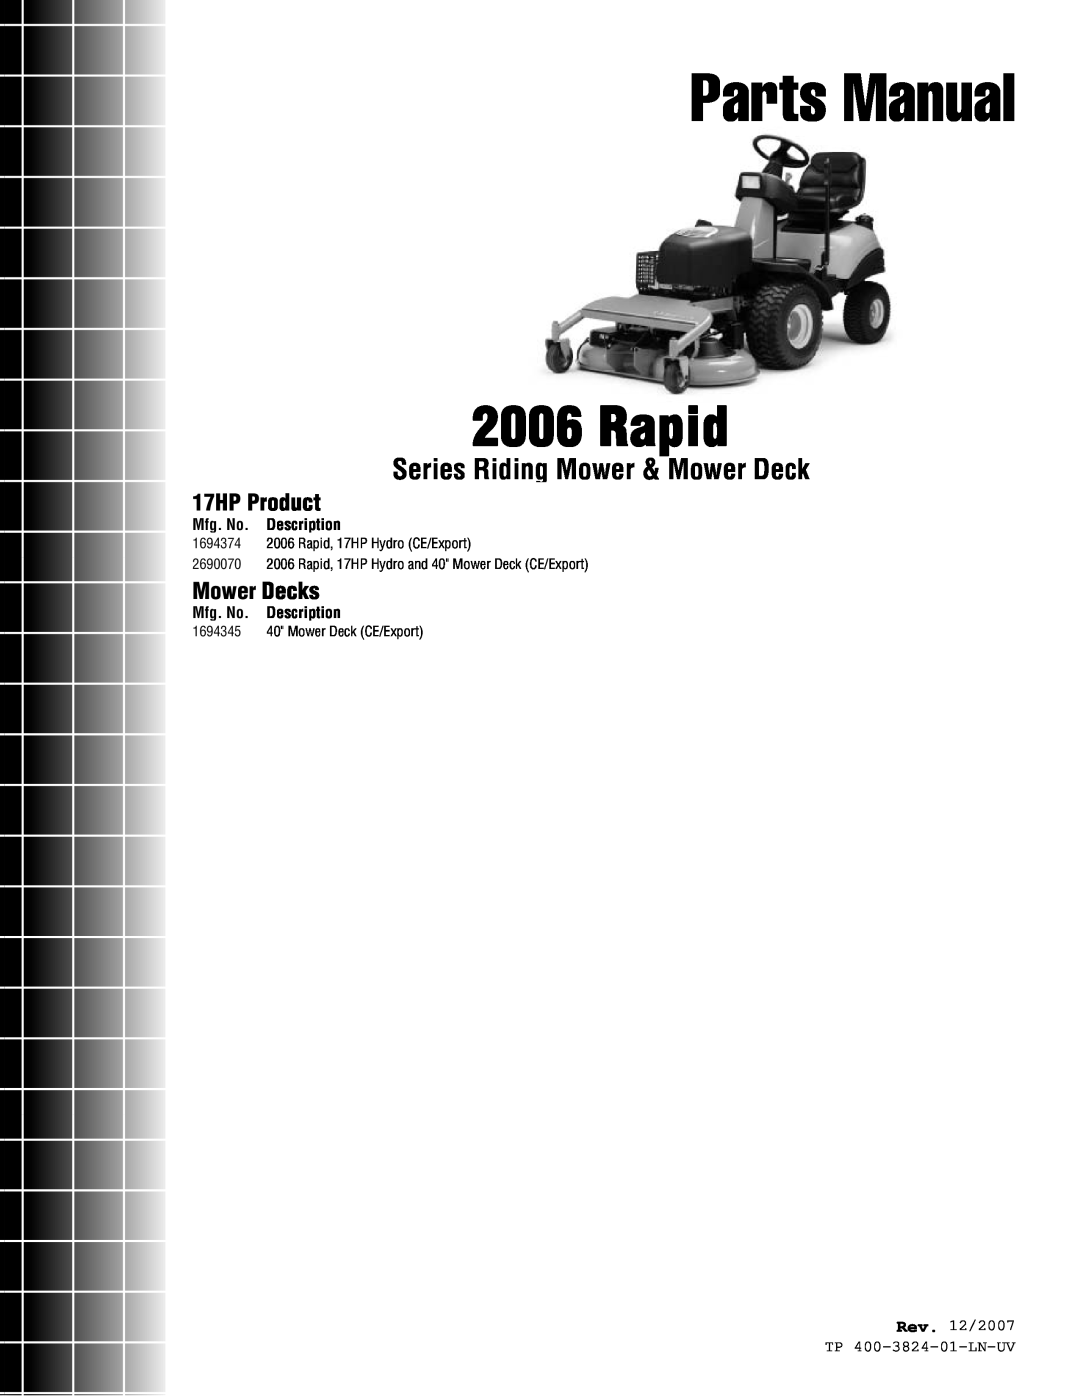 Snapper 2006 Rapid manual 17HP Product, Mower Decks, Mfg. No. Description, Rev. 12/2007, TP 400-3824-01-LN-UV 